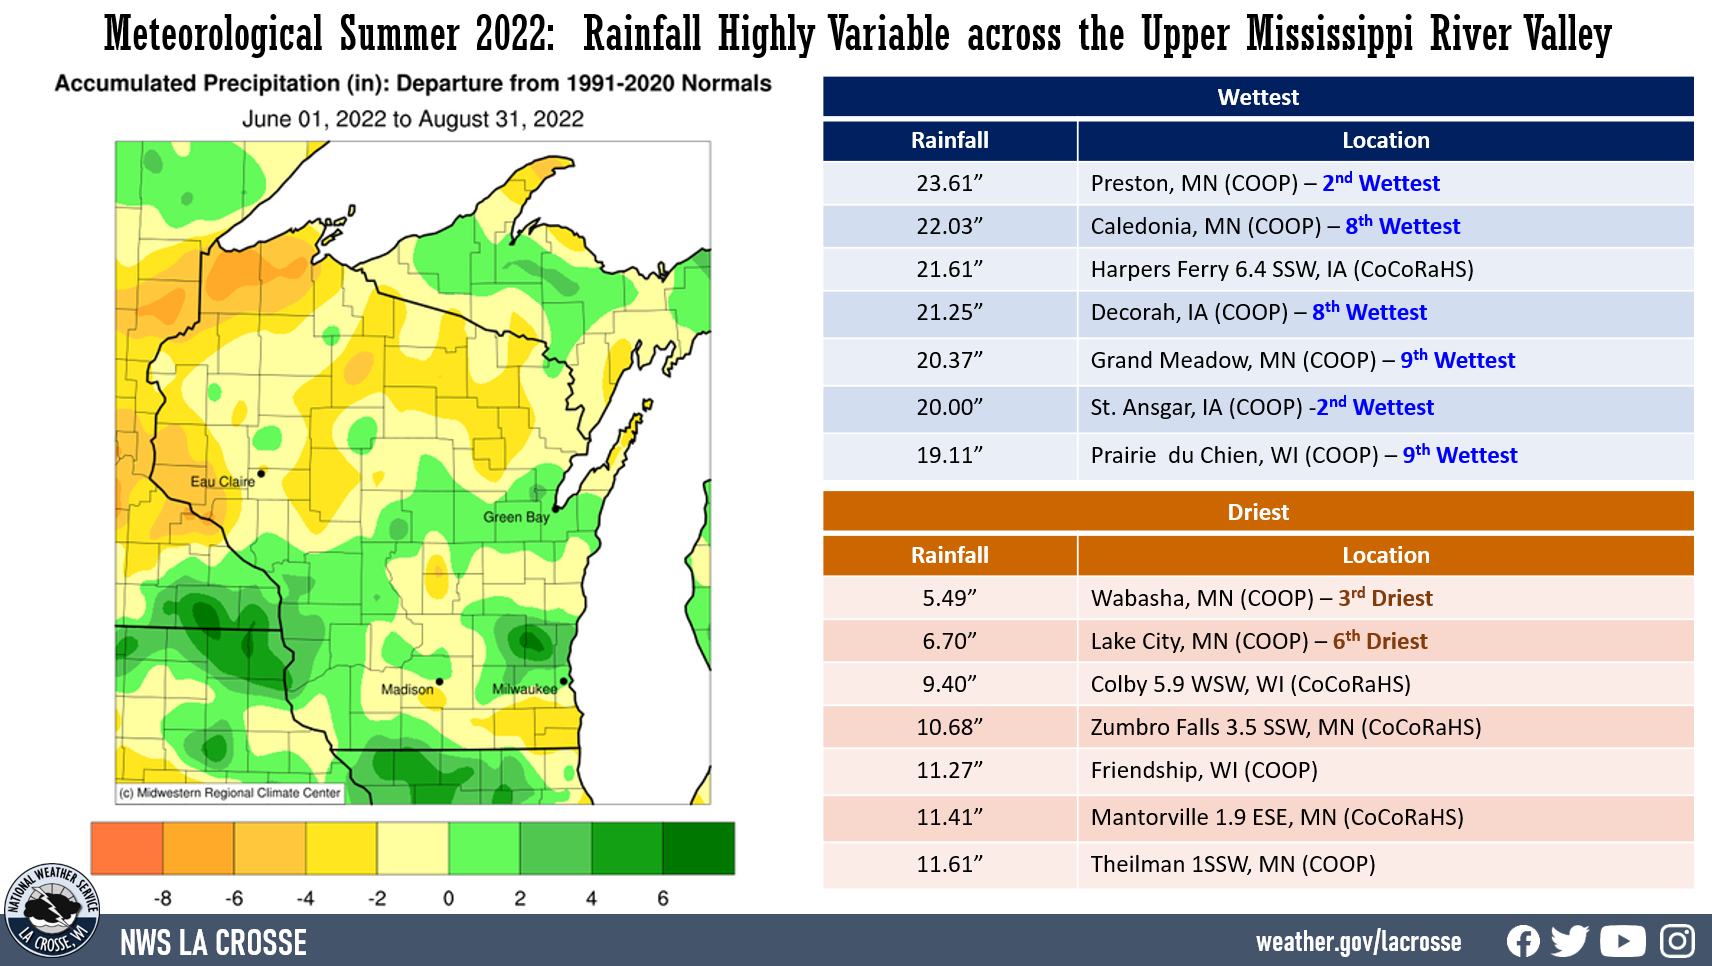 Summer rainfall statistics for the Upper Mississippi River Valley.